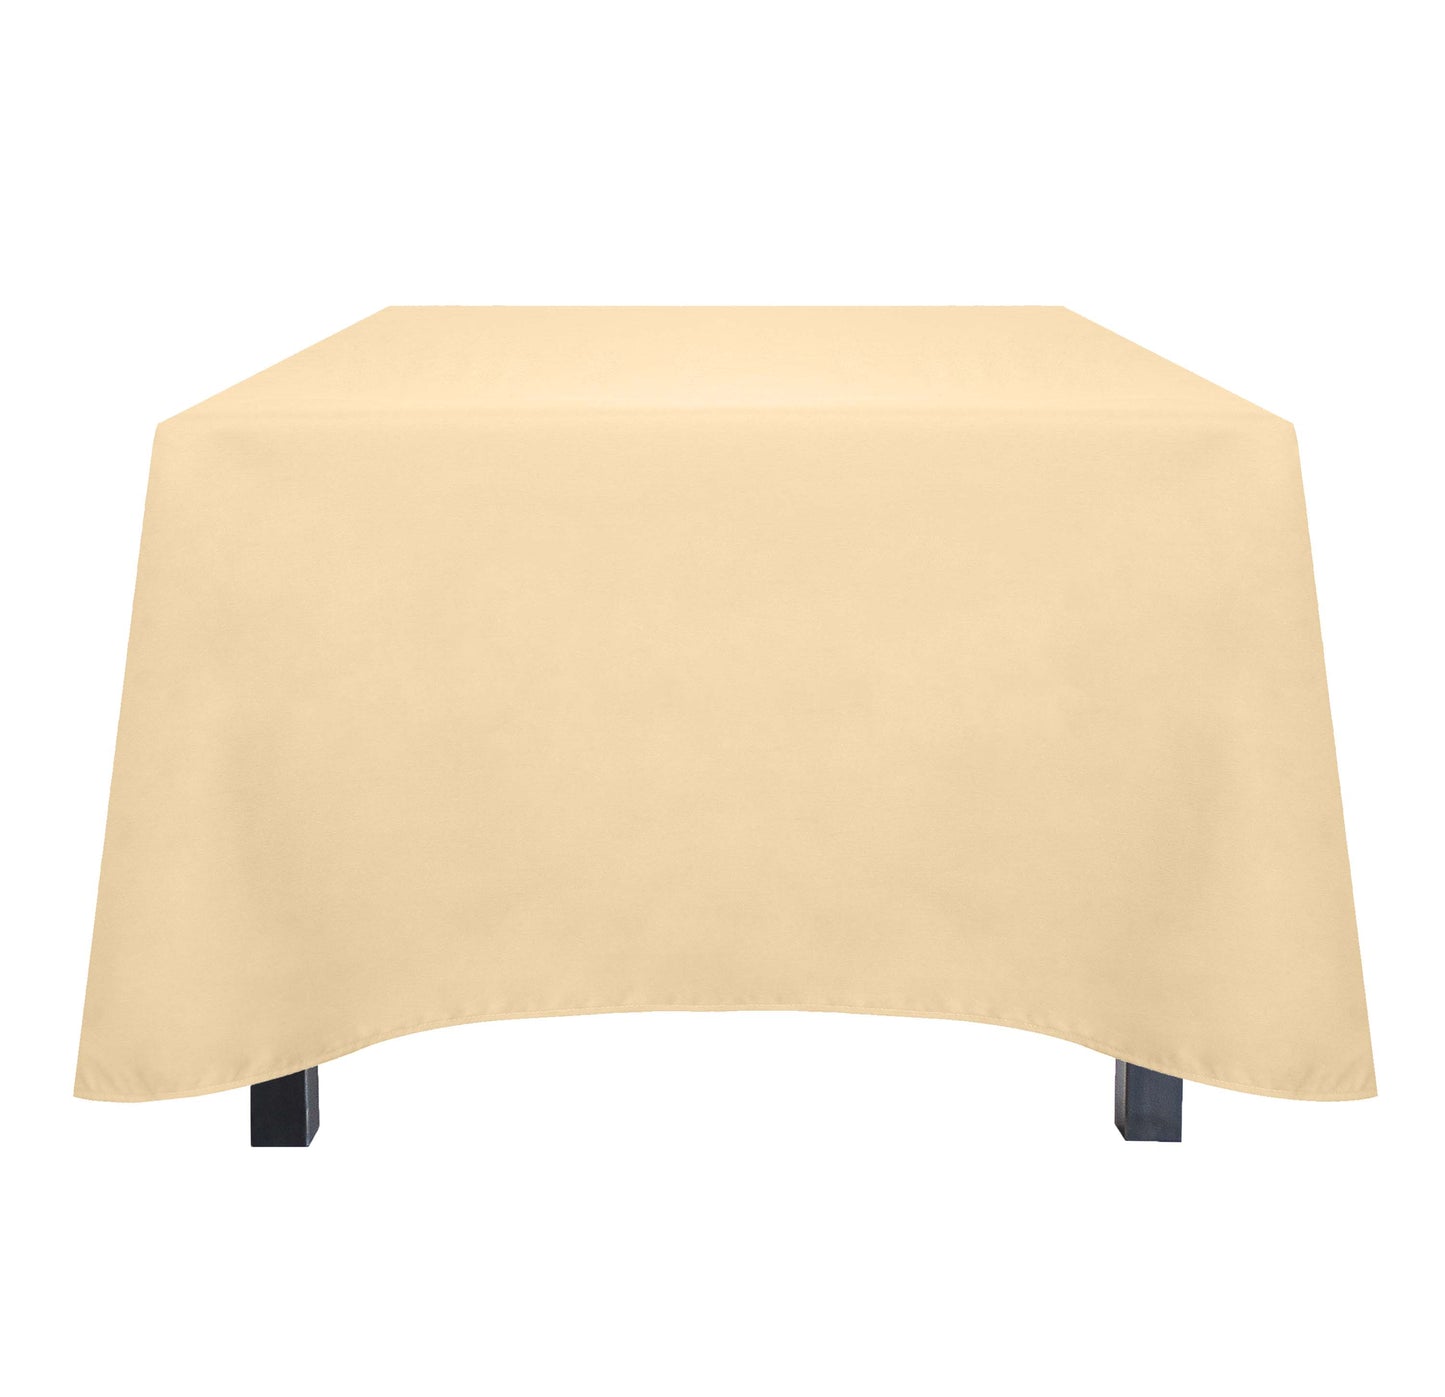 Tablecloth, Milliken Signature, 90x90 inch, Square, 24 pcs/pk